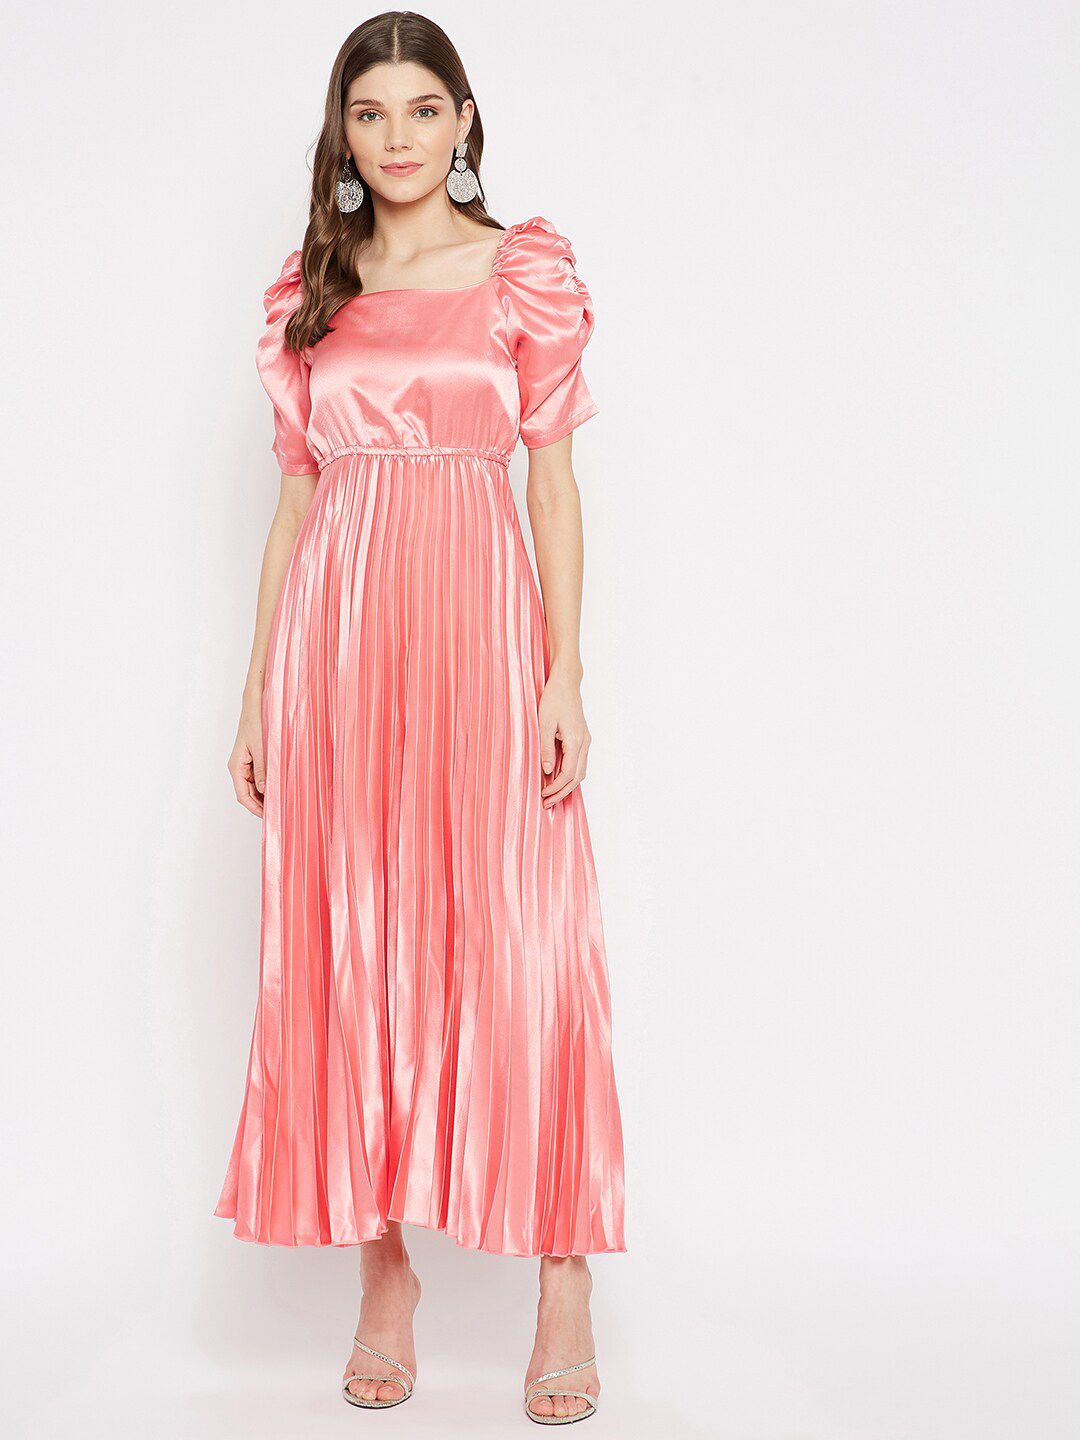 U&F Peach-Coloured Crepe Maxi Dress Price in India